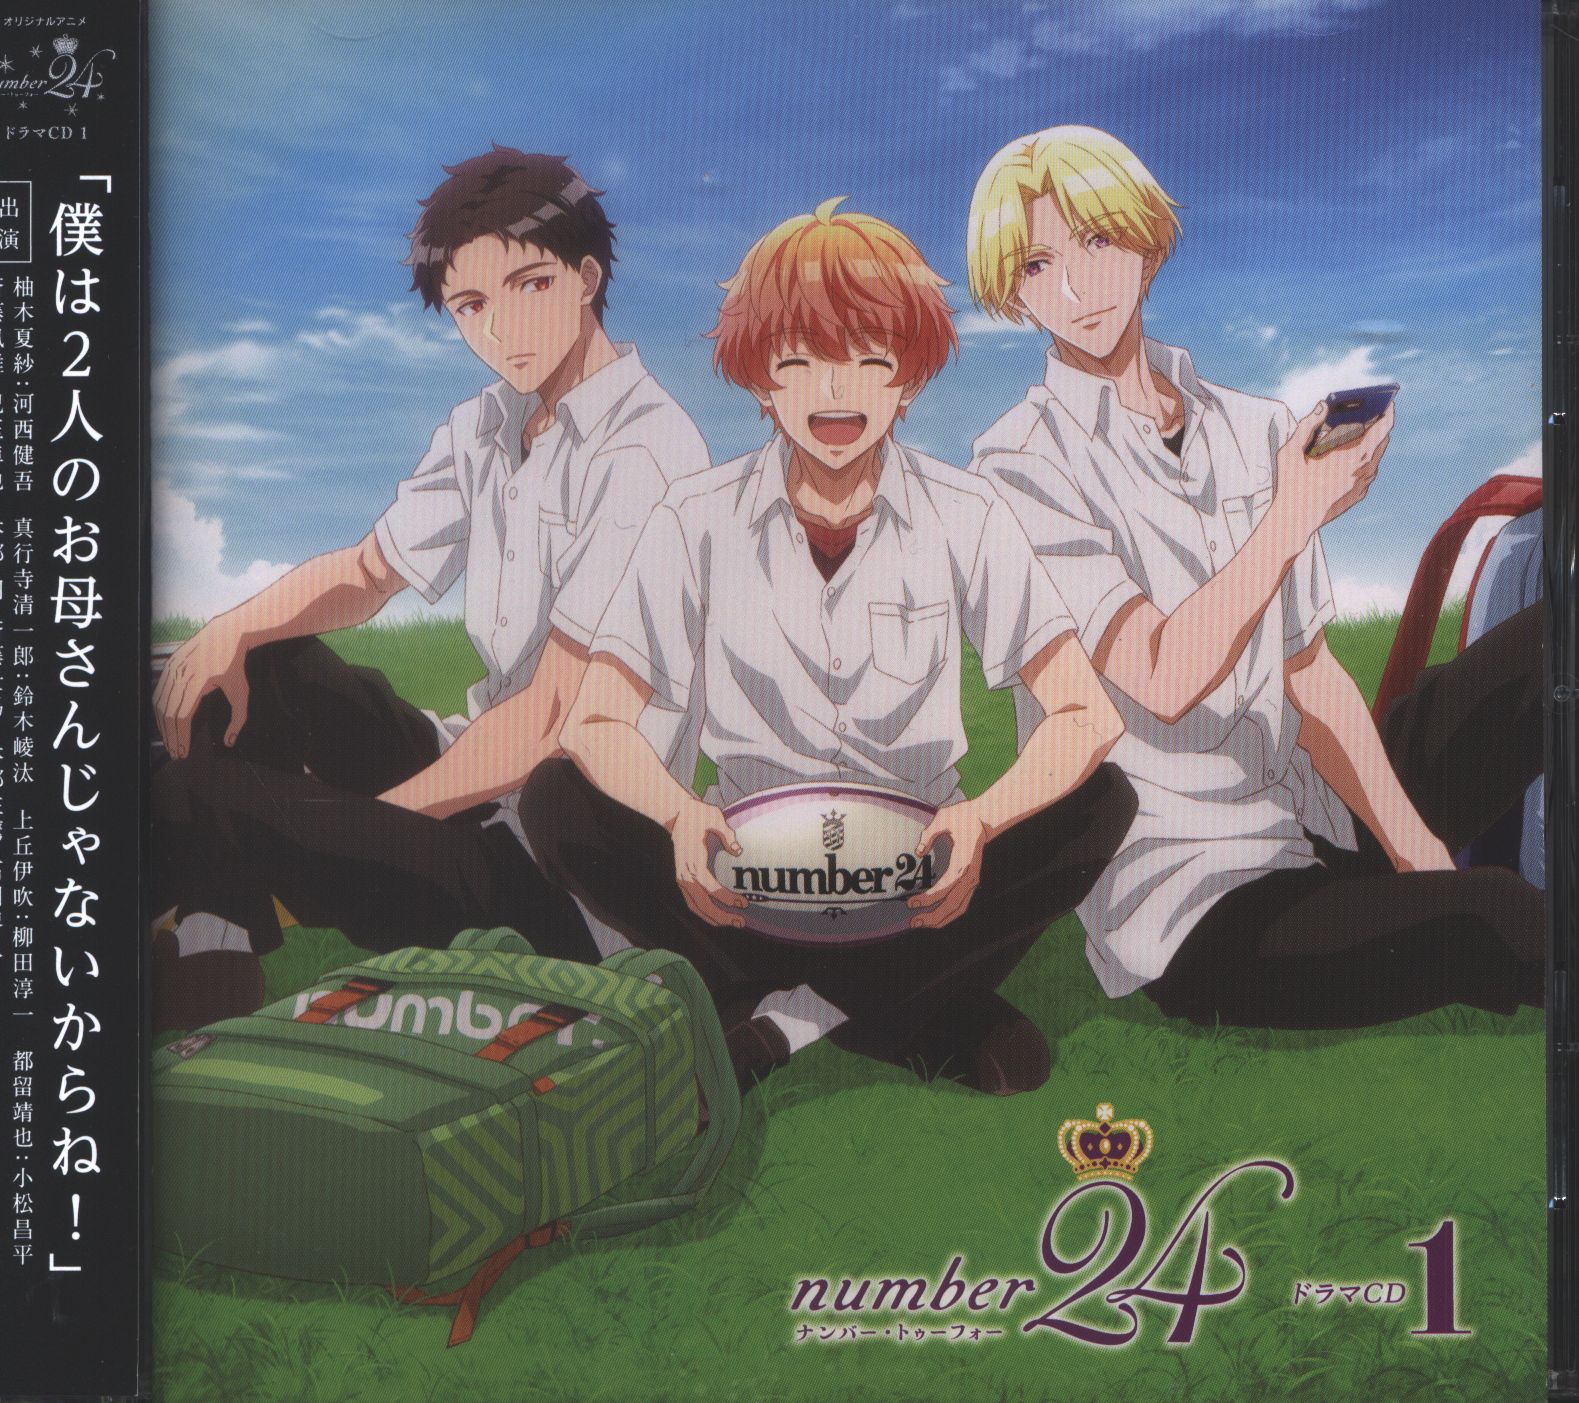 number24 」 Drama CD1, Music software